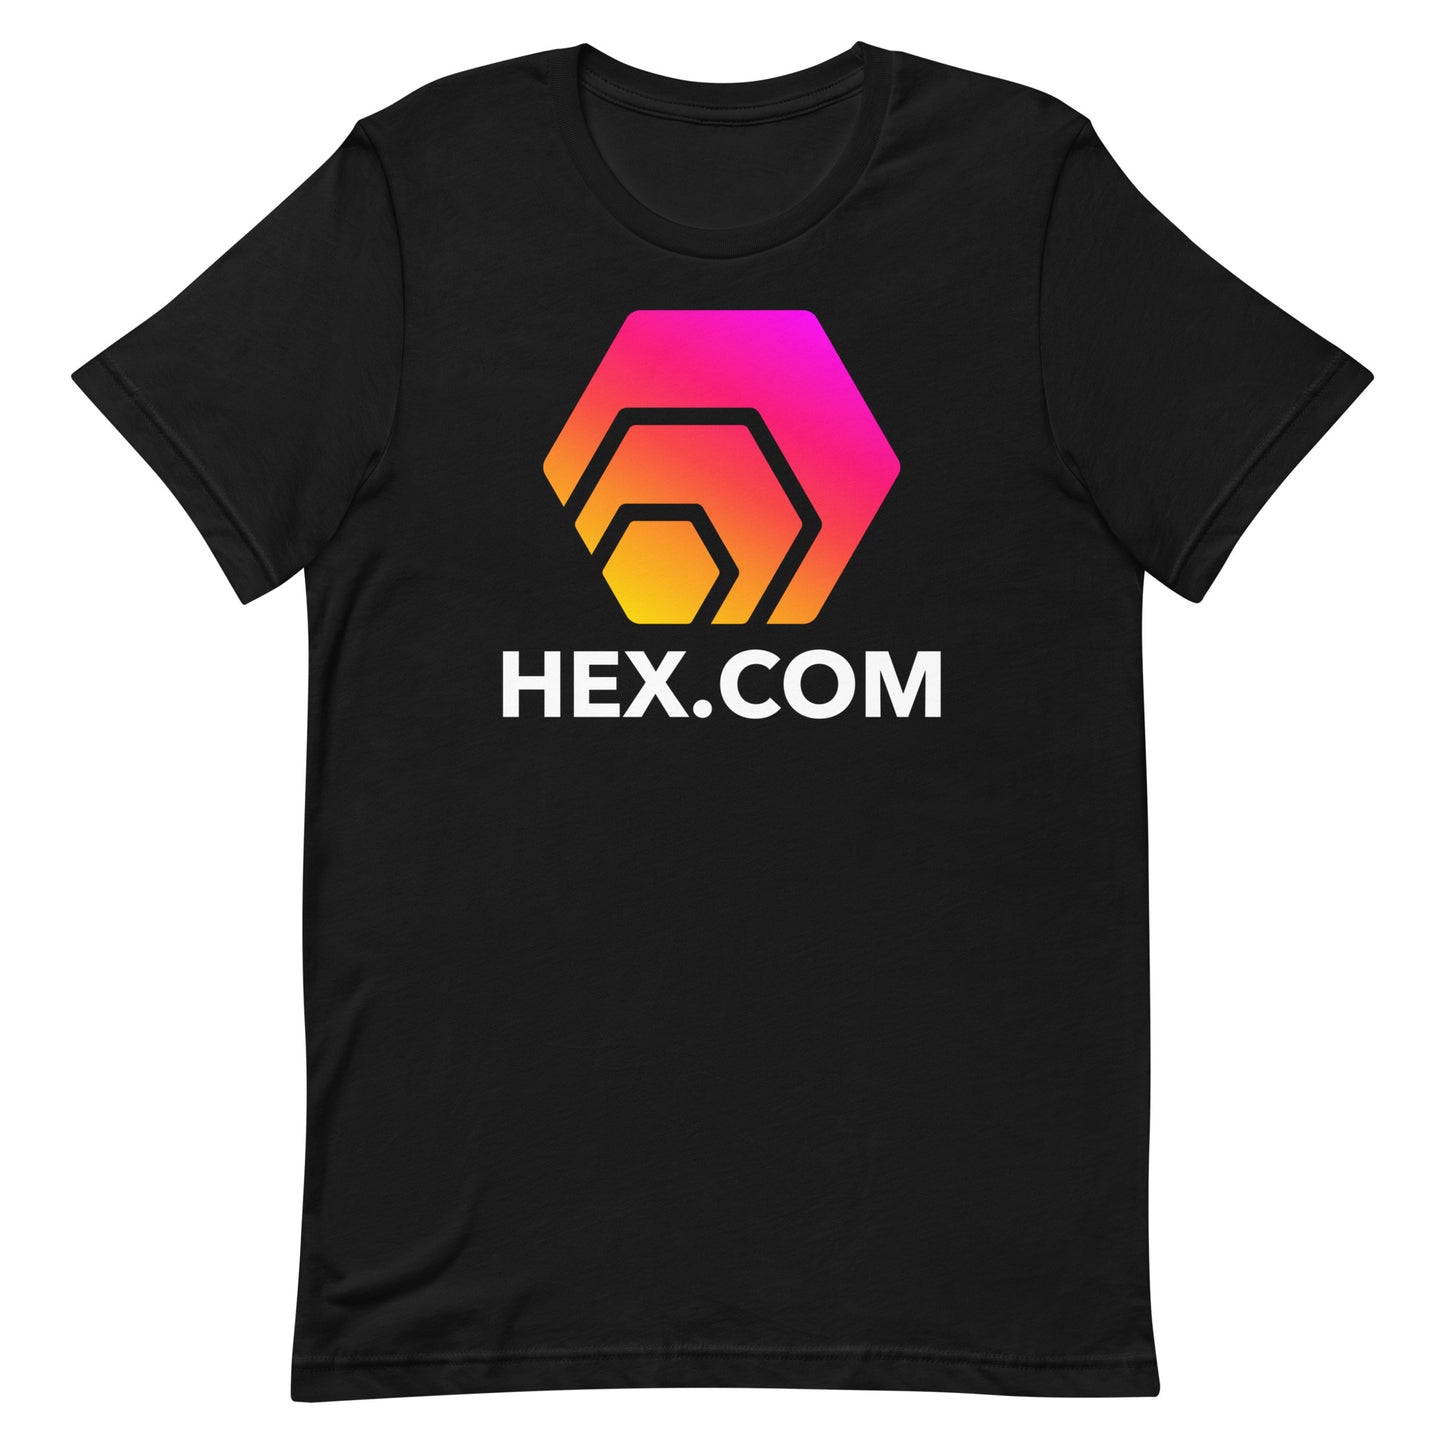 HEX.COM T-Shirt Sale!